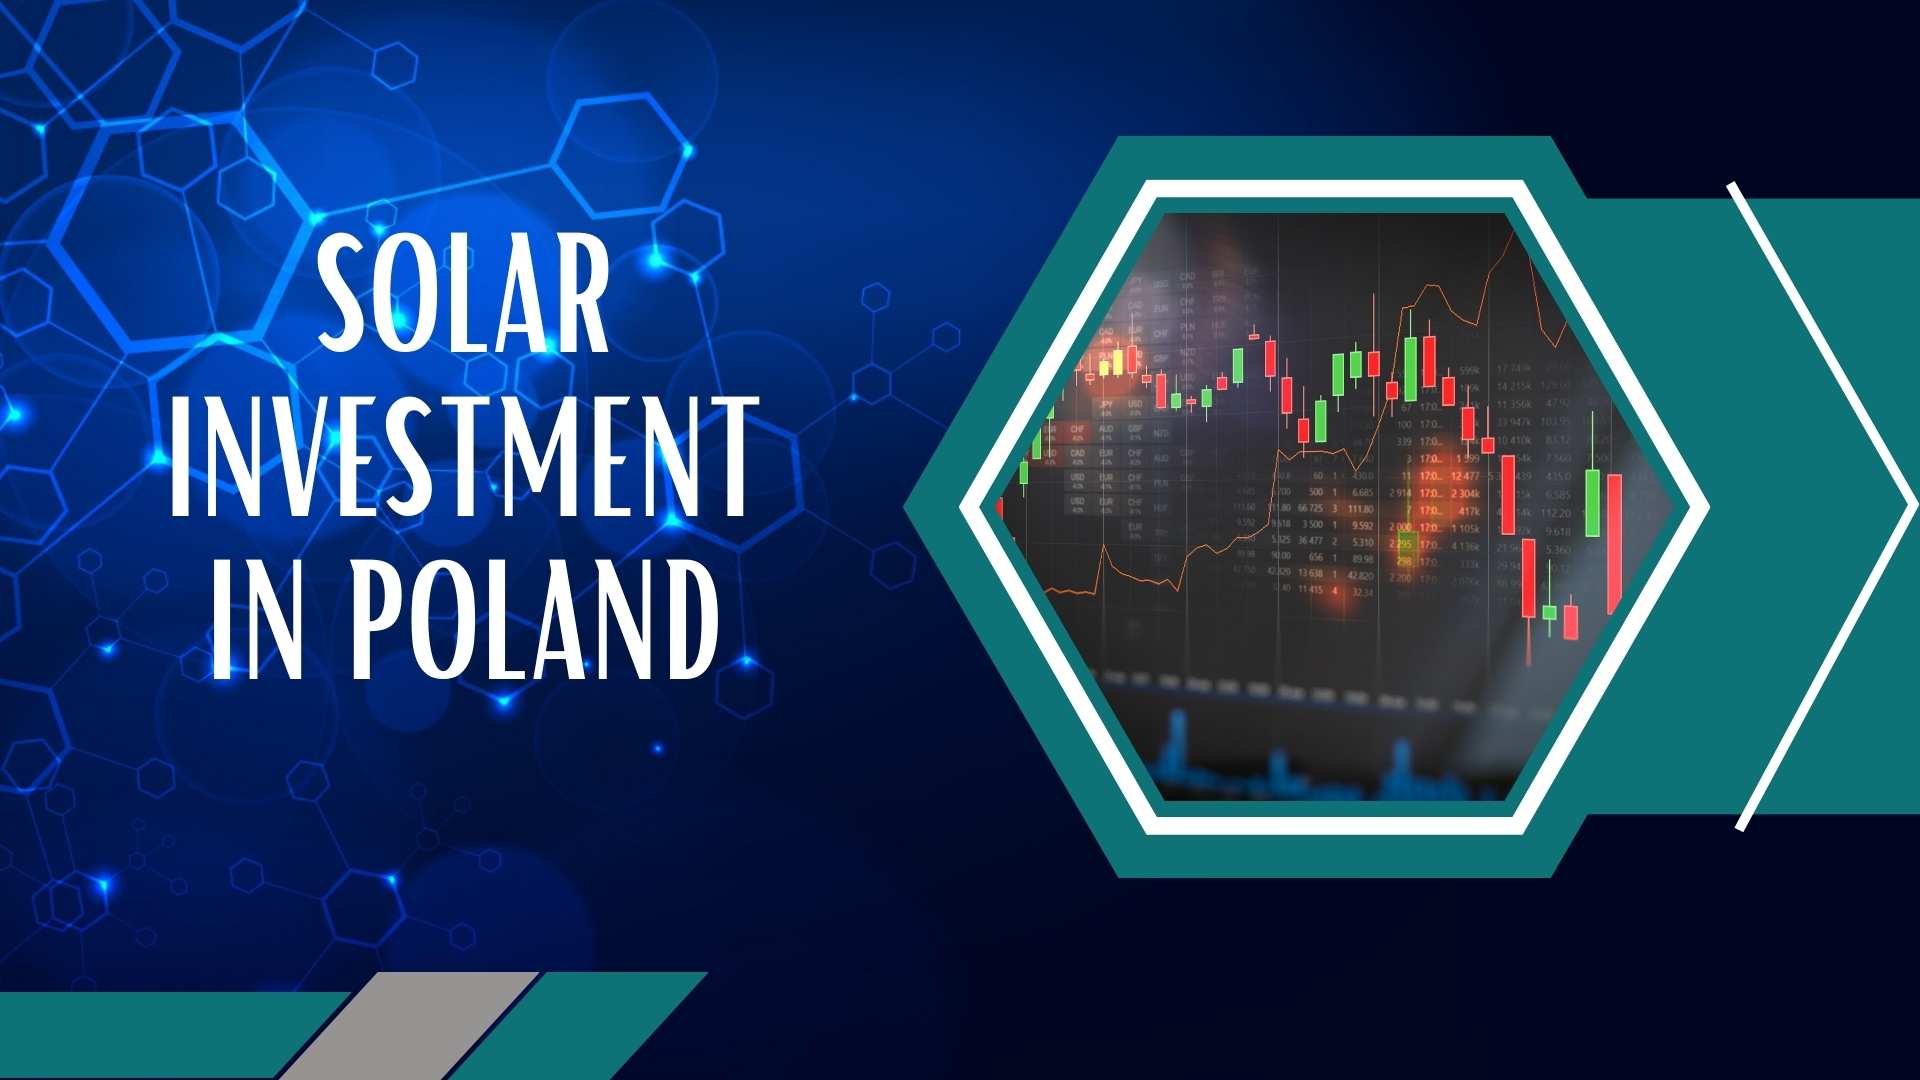 Solar investment in Poland